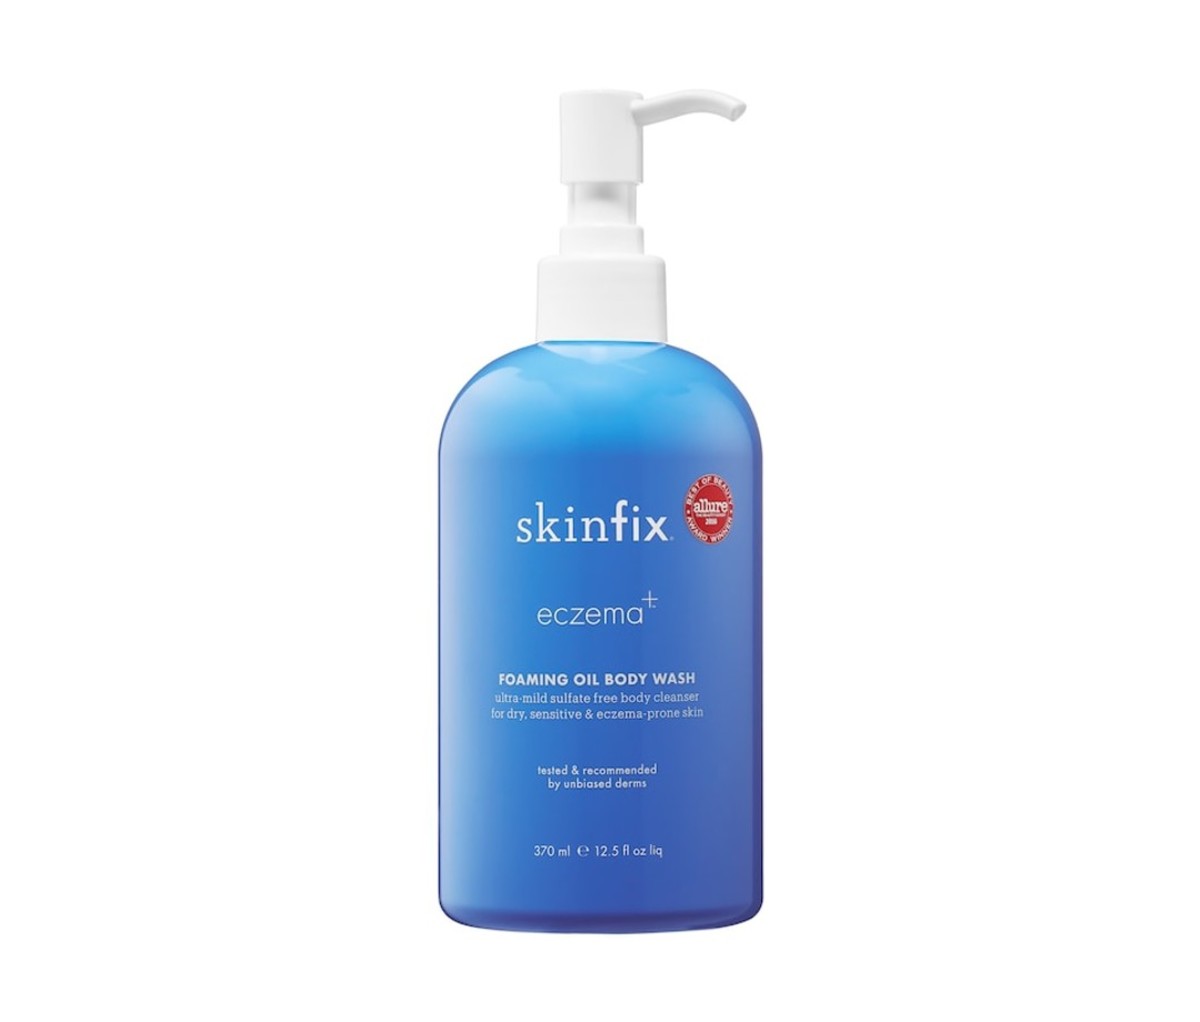 Skinfix Eczema+ Foaming Oil Body Wash